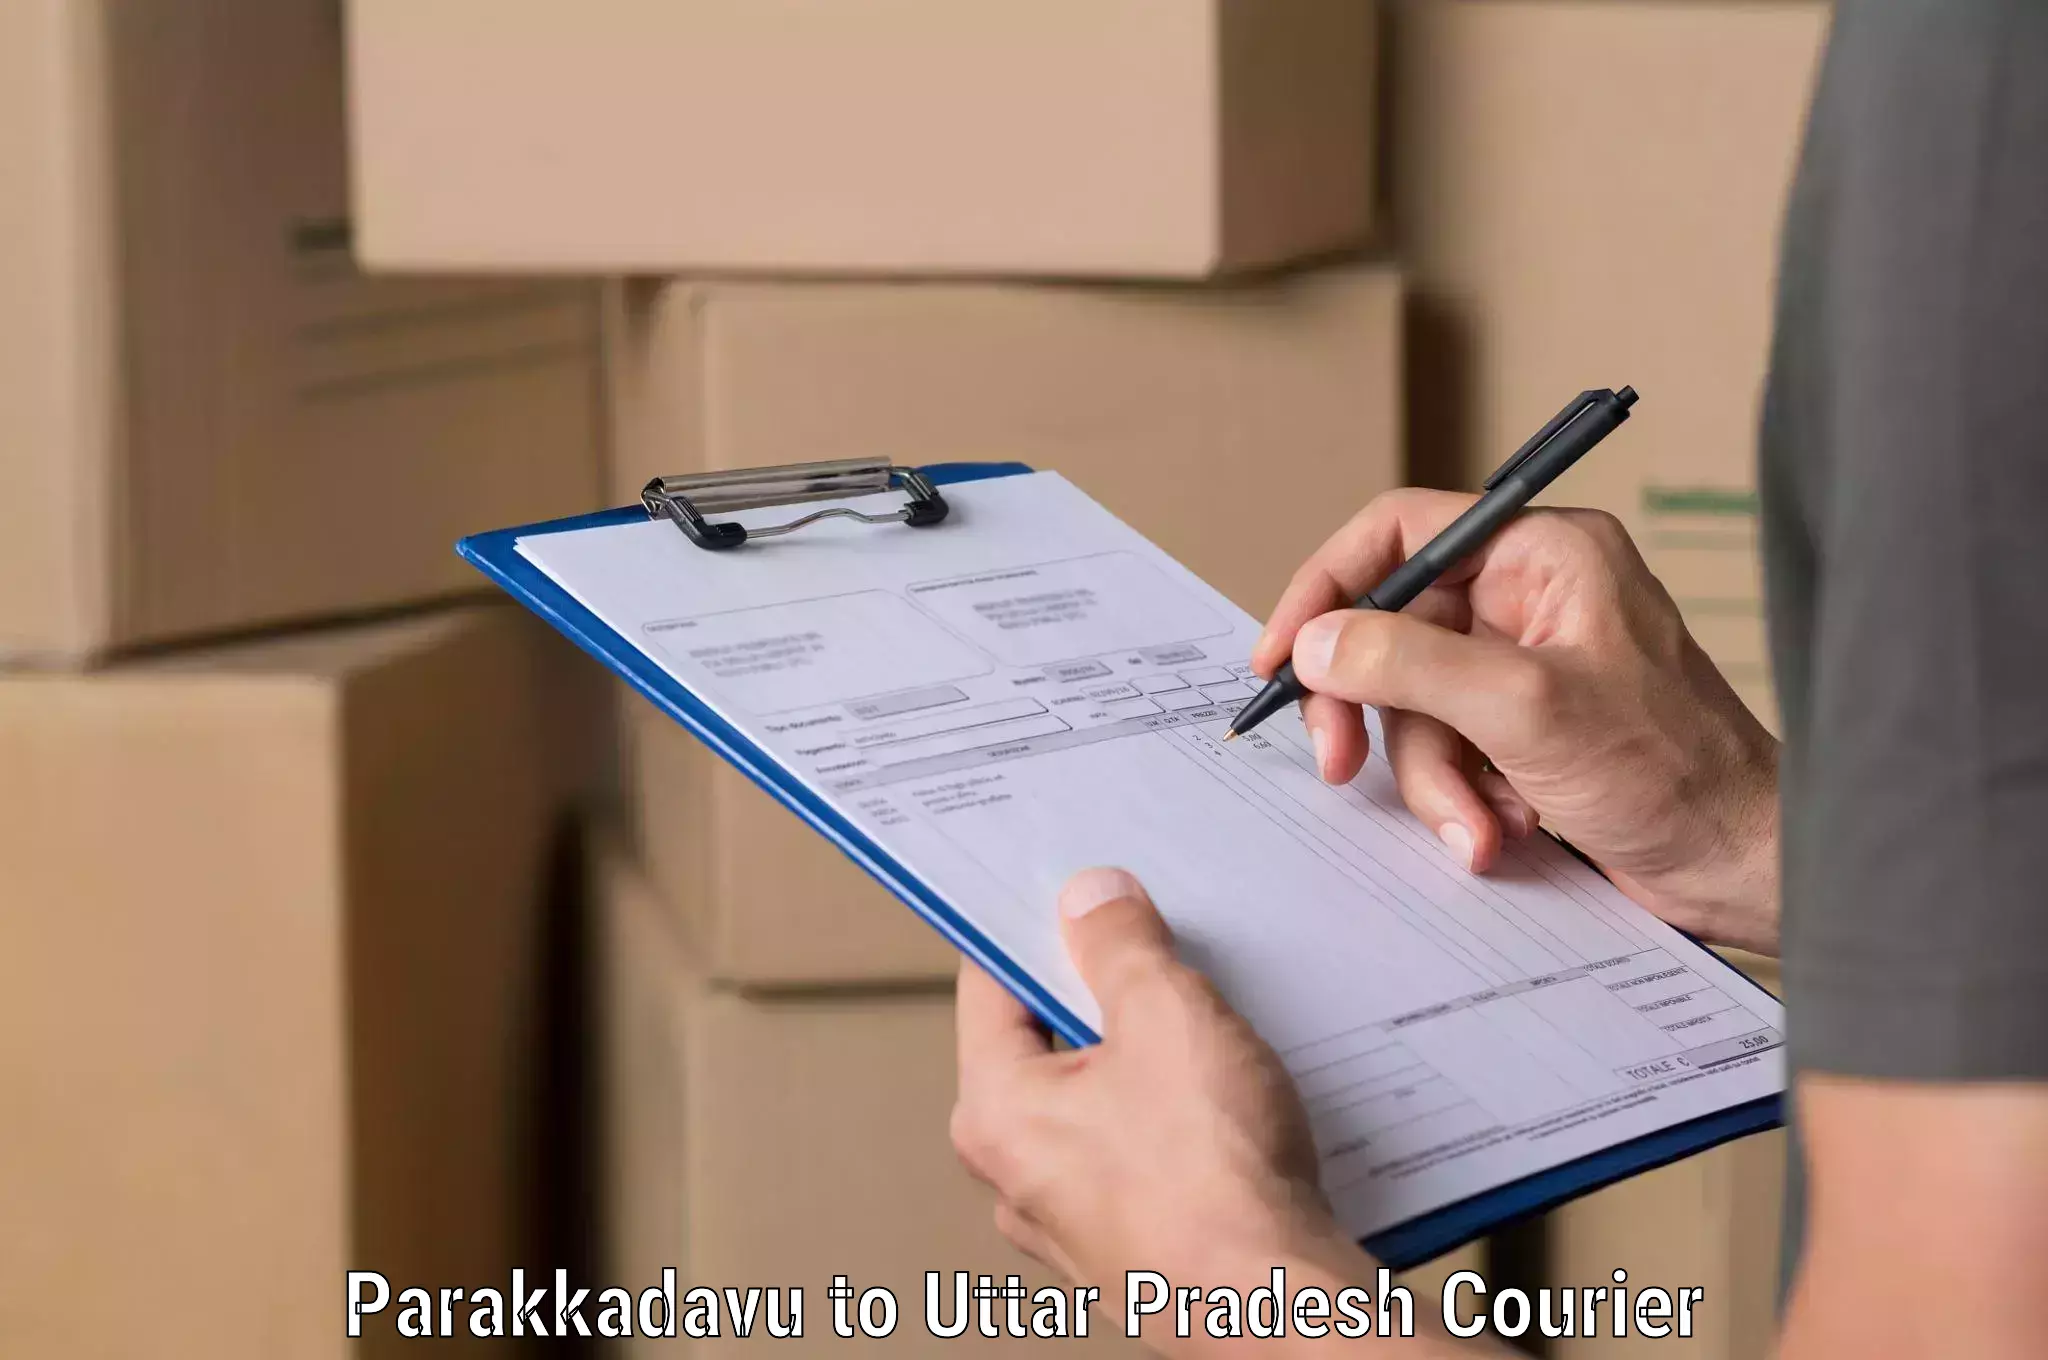 Professional parcel services Parakkadavu to Agra